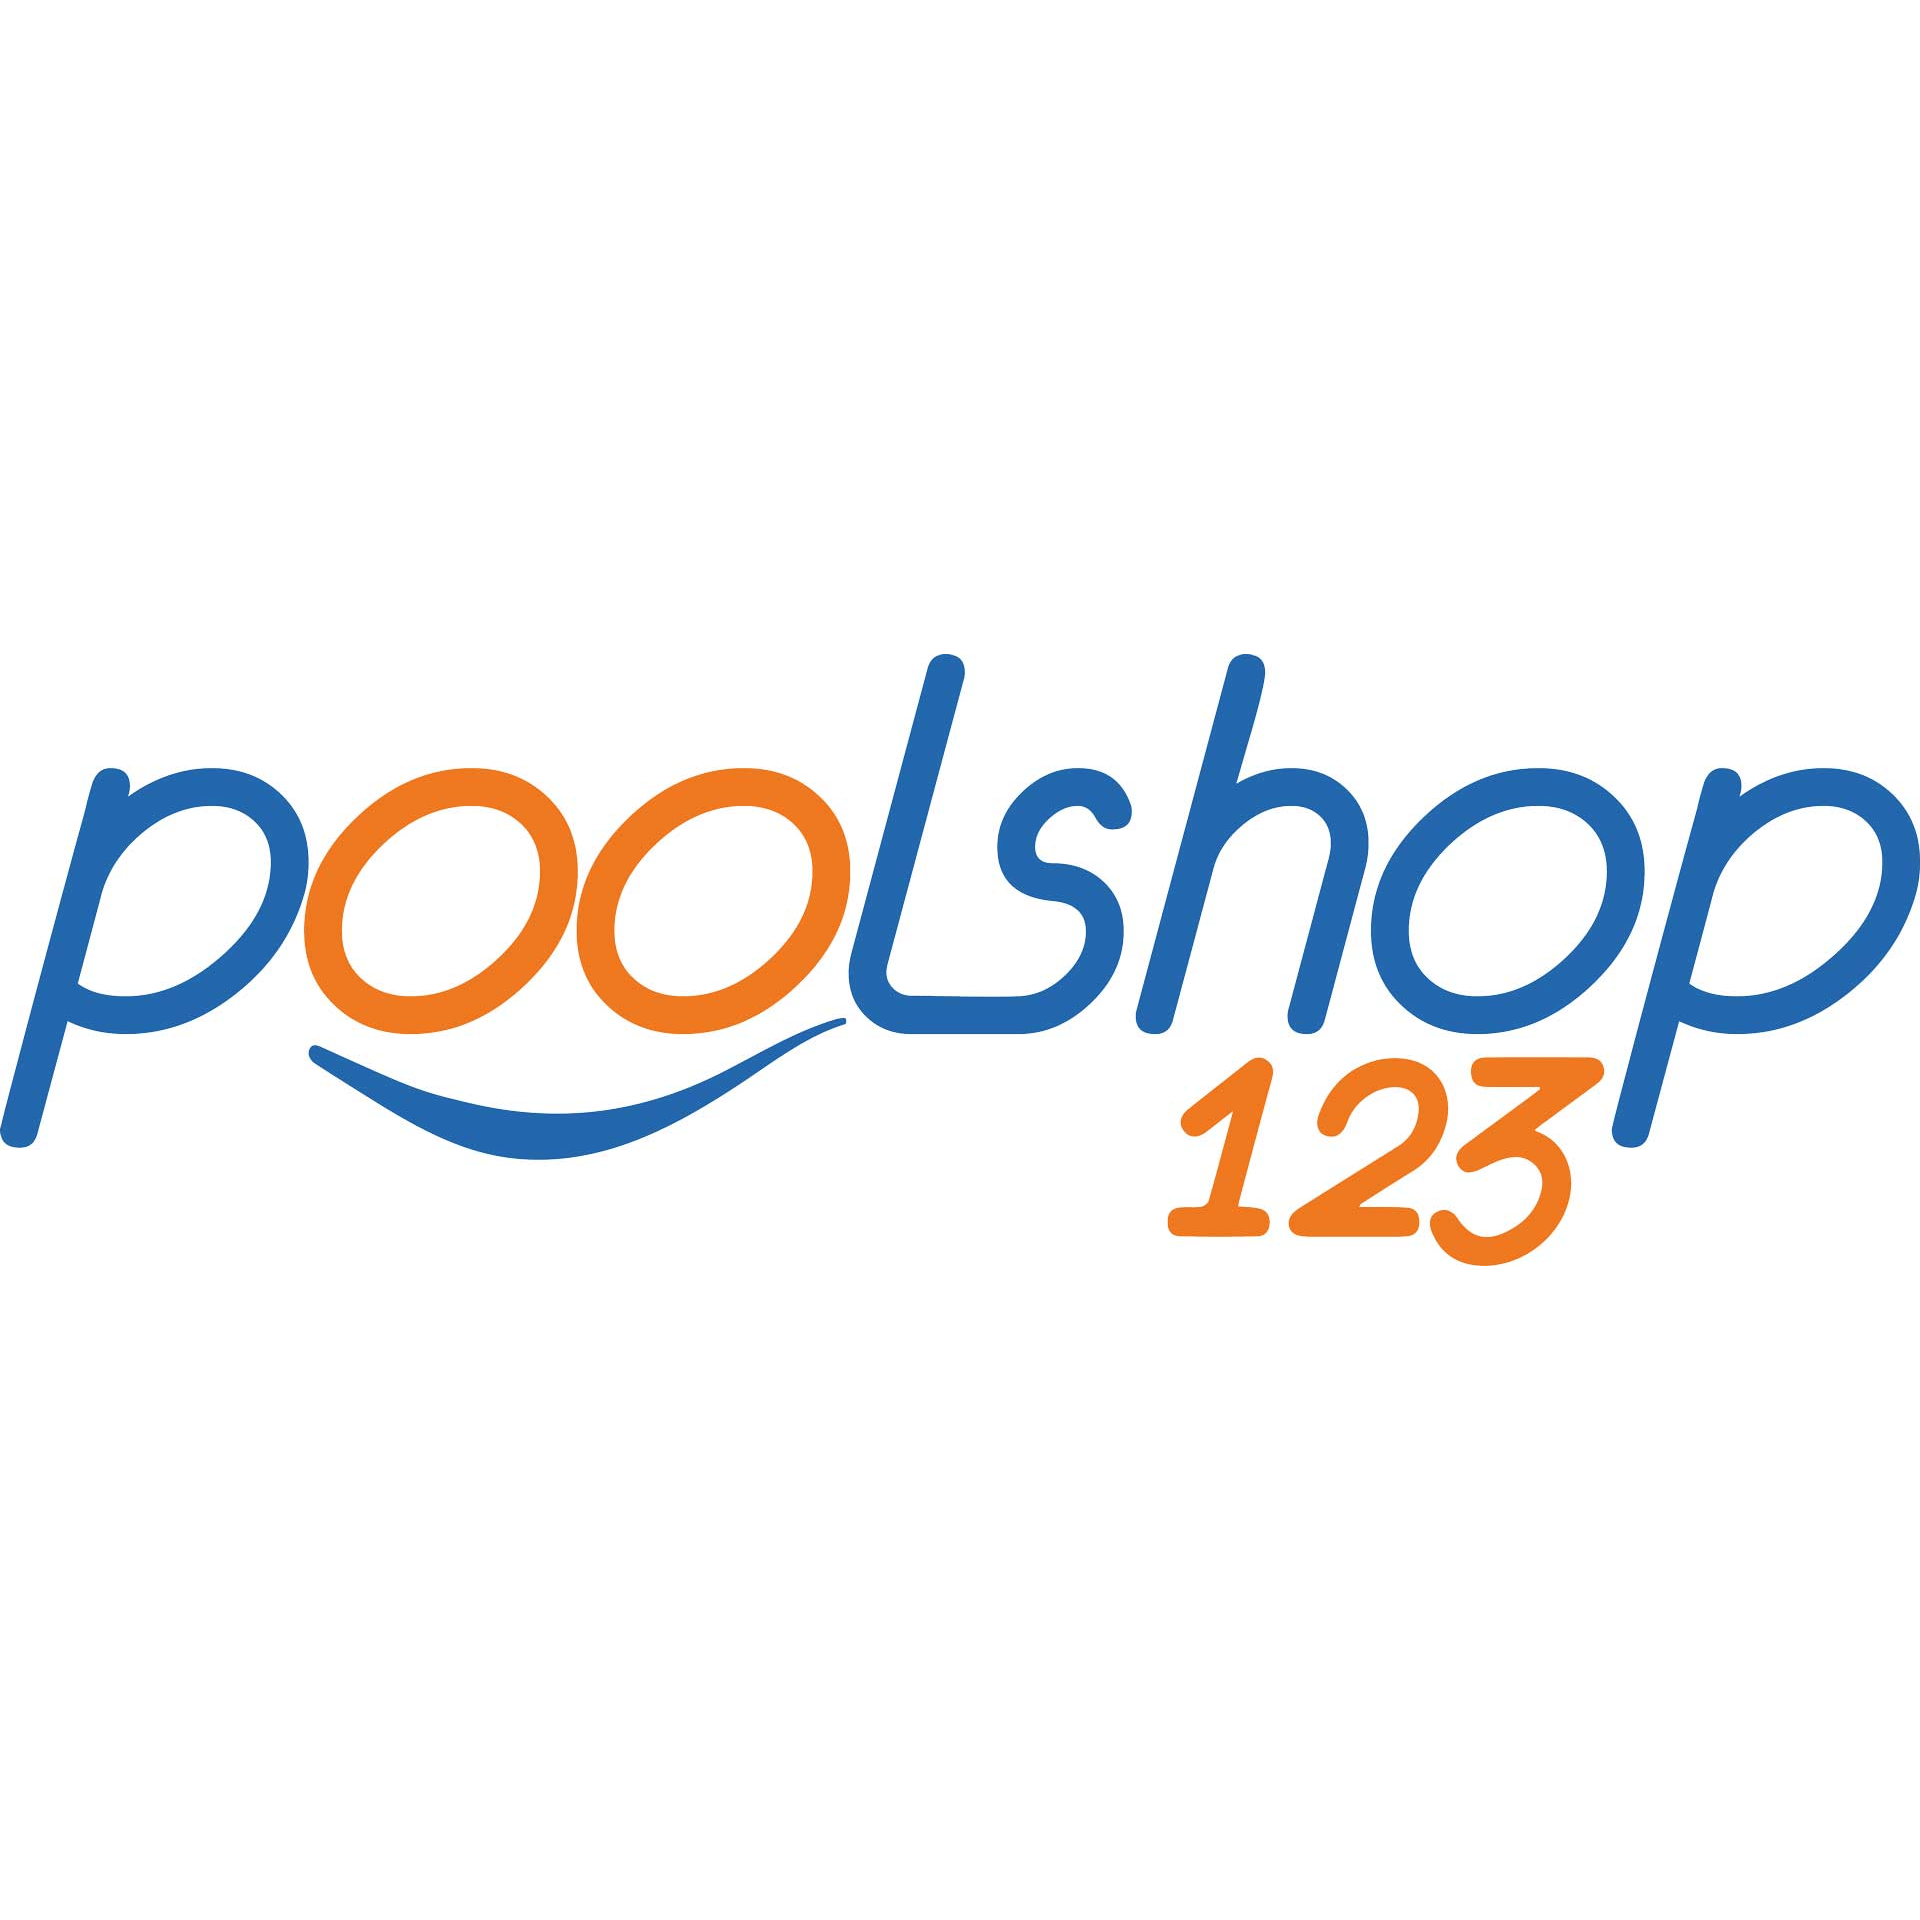 Poolshop123 GmbH Logo